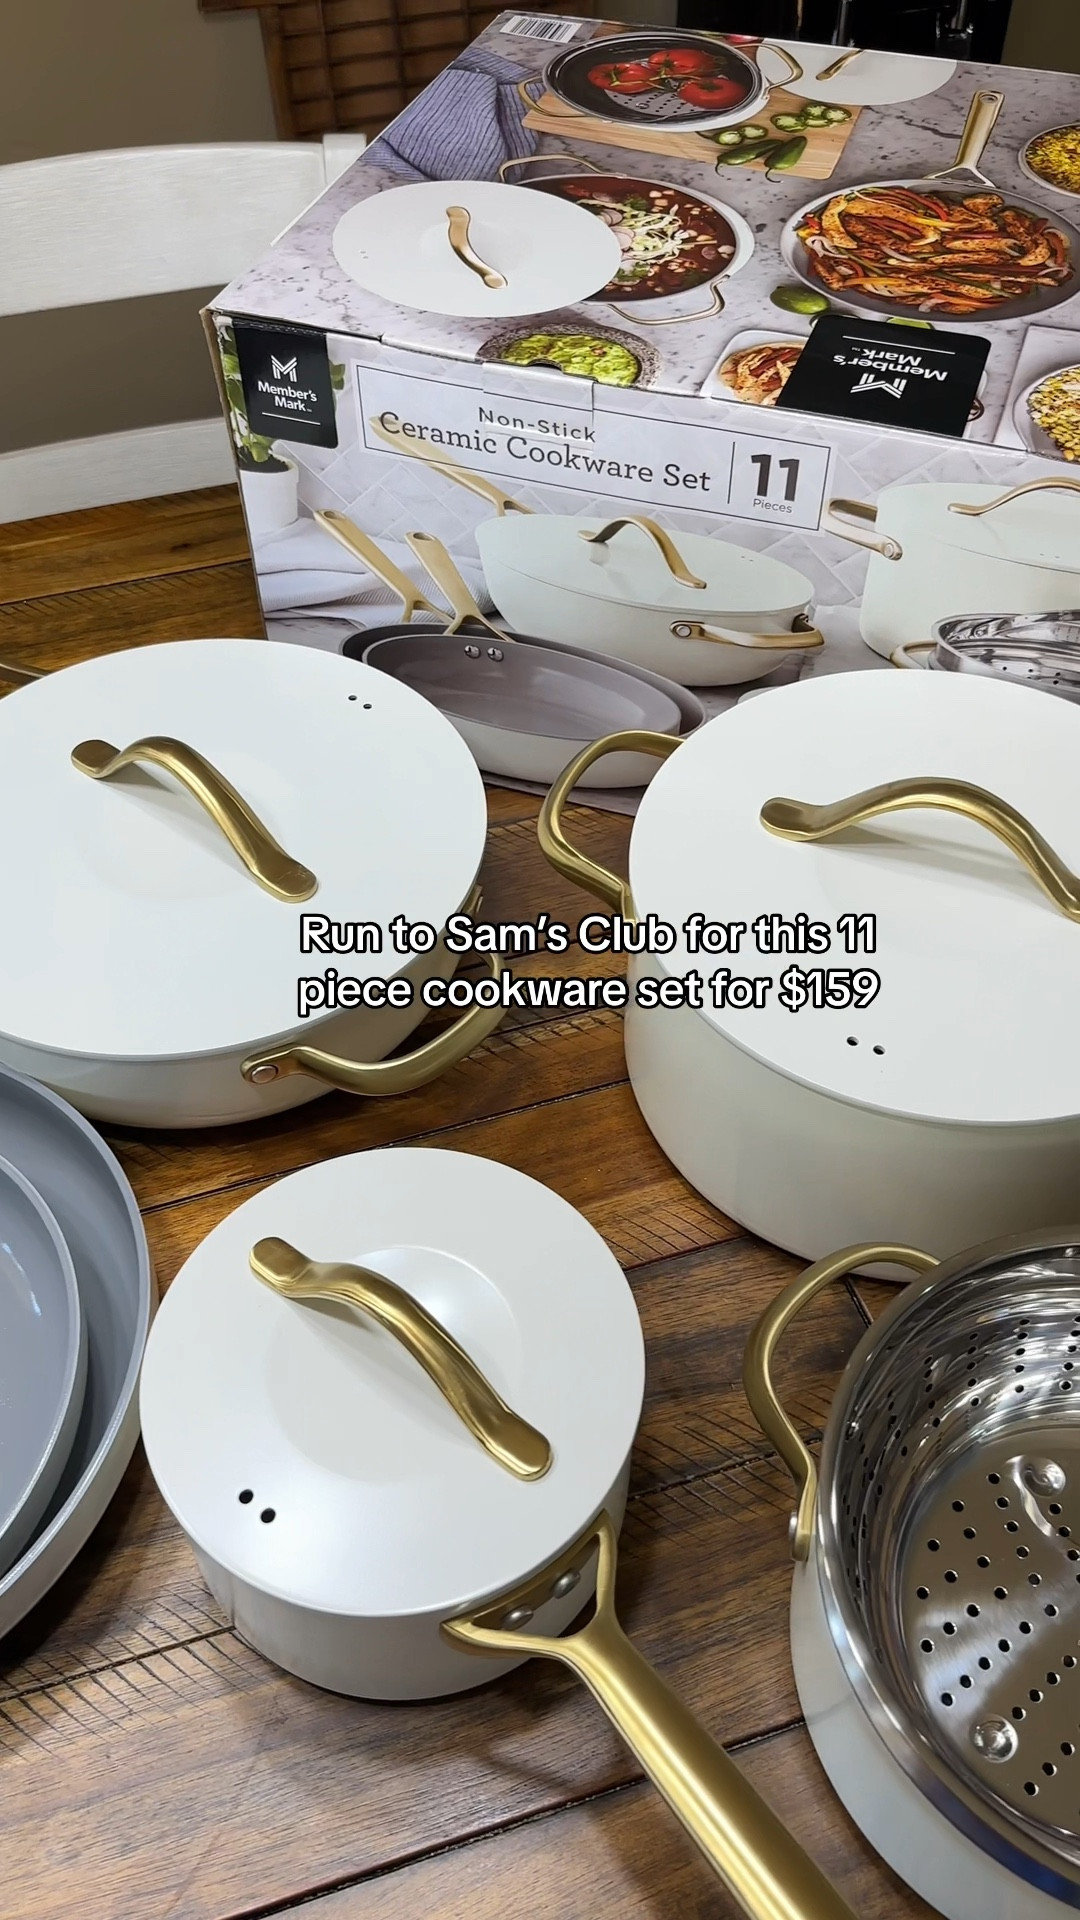 Member's Mark 11-Piece Modern Ceramic Non Stick Cookware Set, Navy and Gold